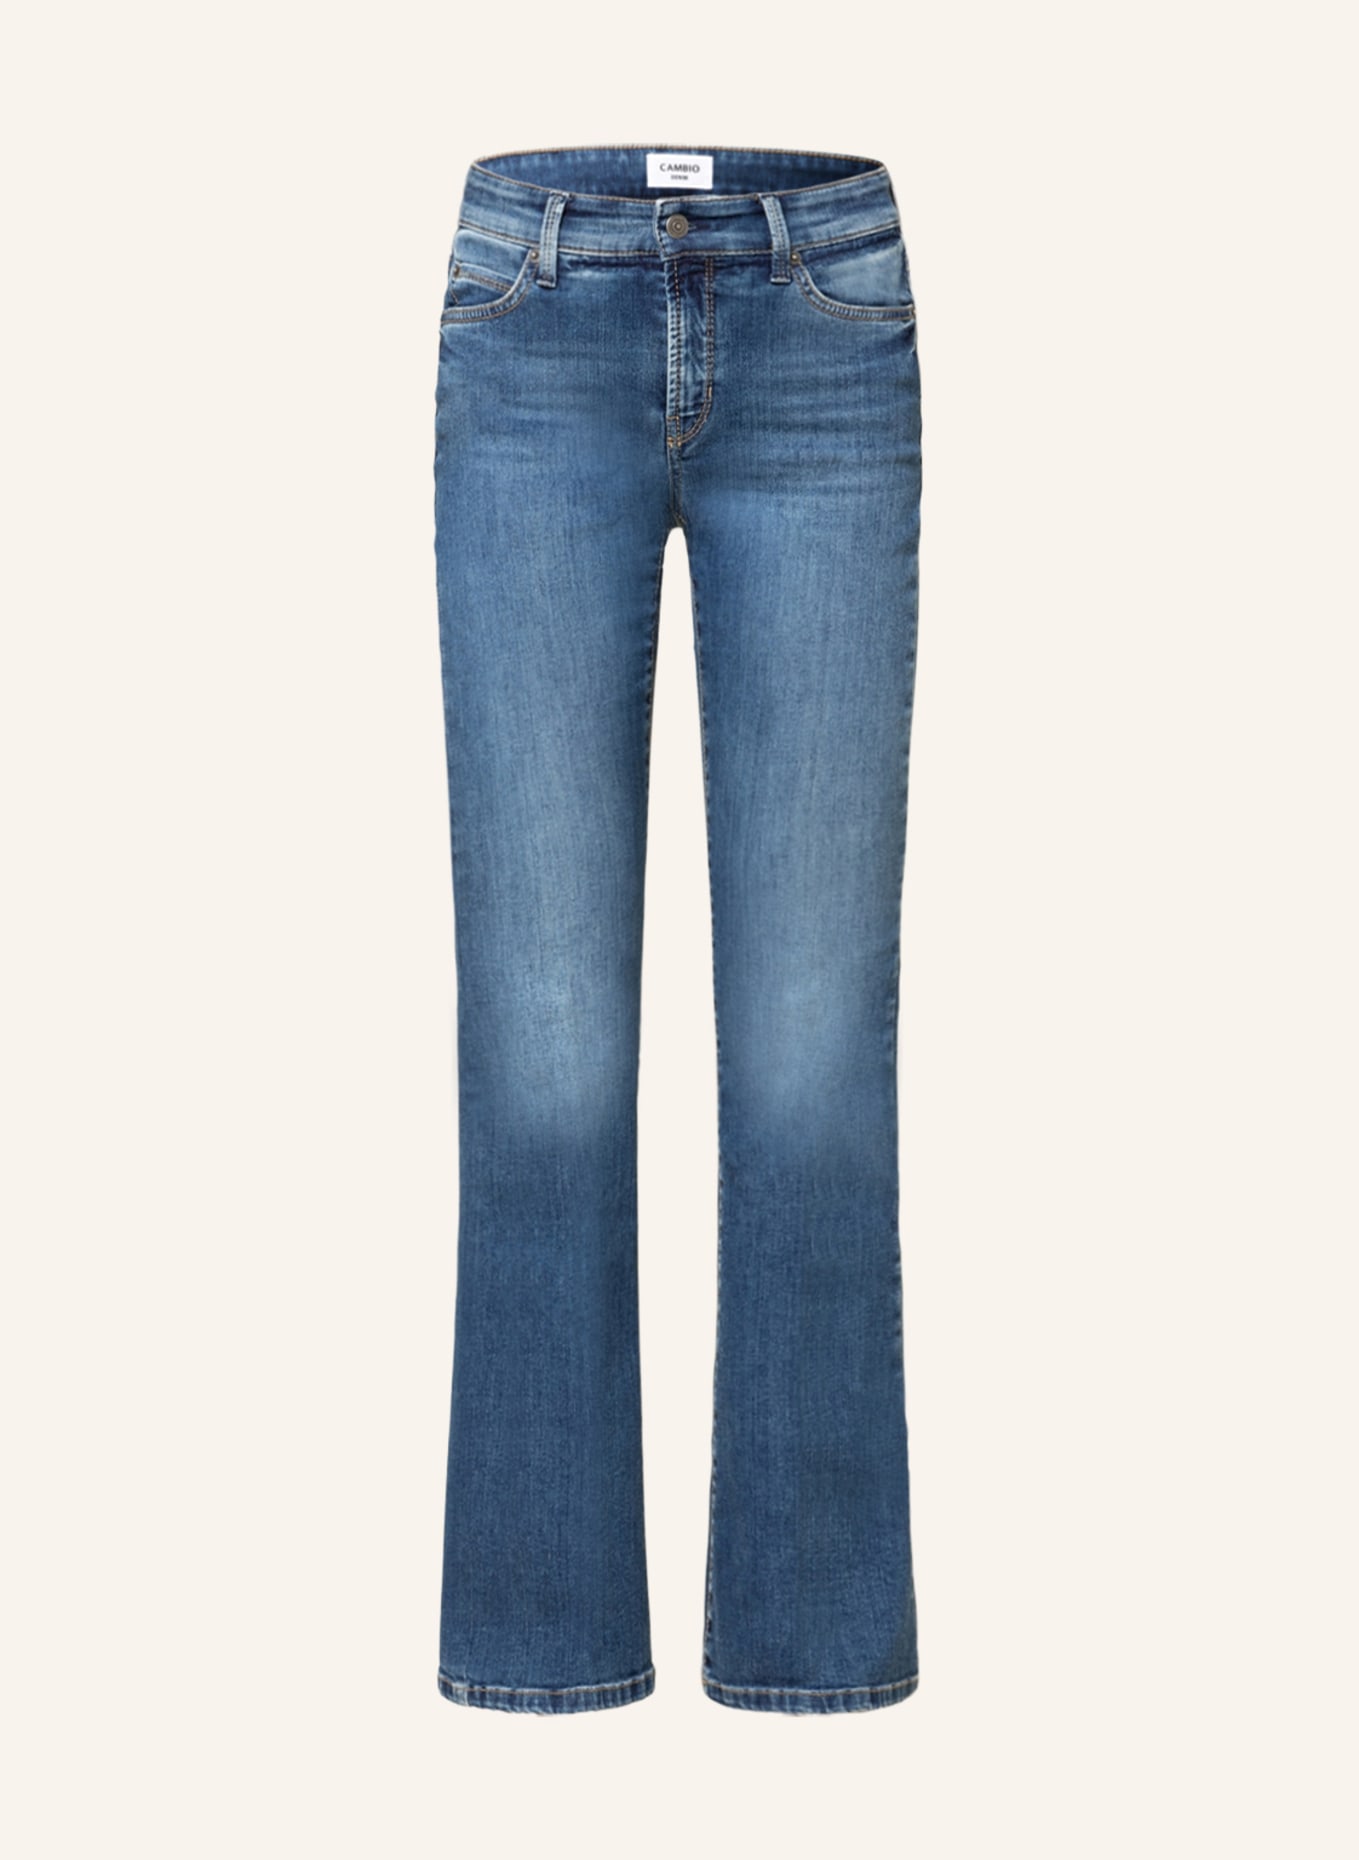 CAMBIO Flared Jeans PARIS, Farbe: 5102 medium contrast splinted (Bild 1)